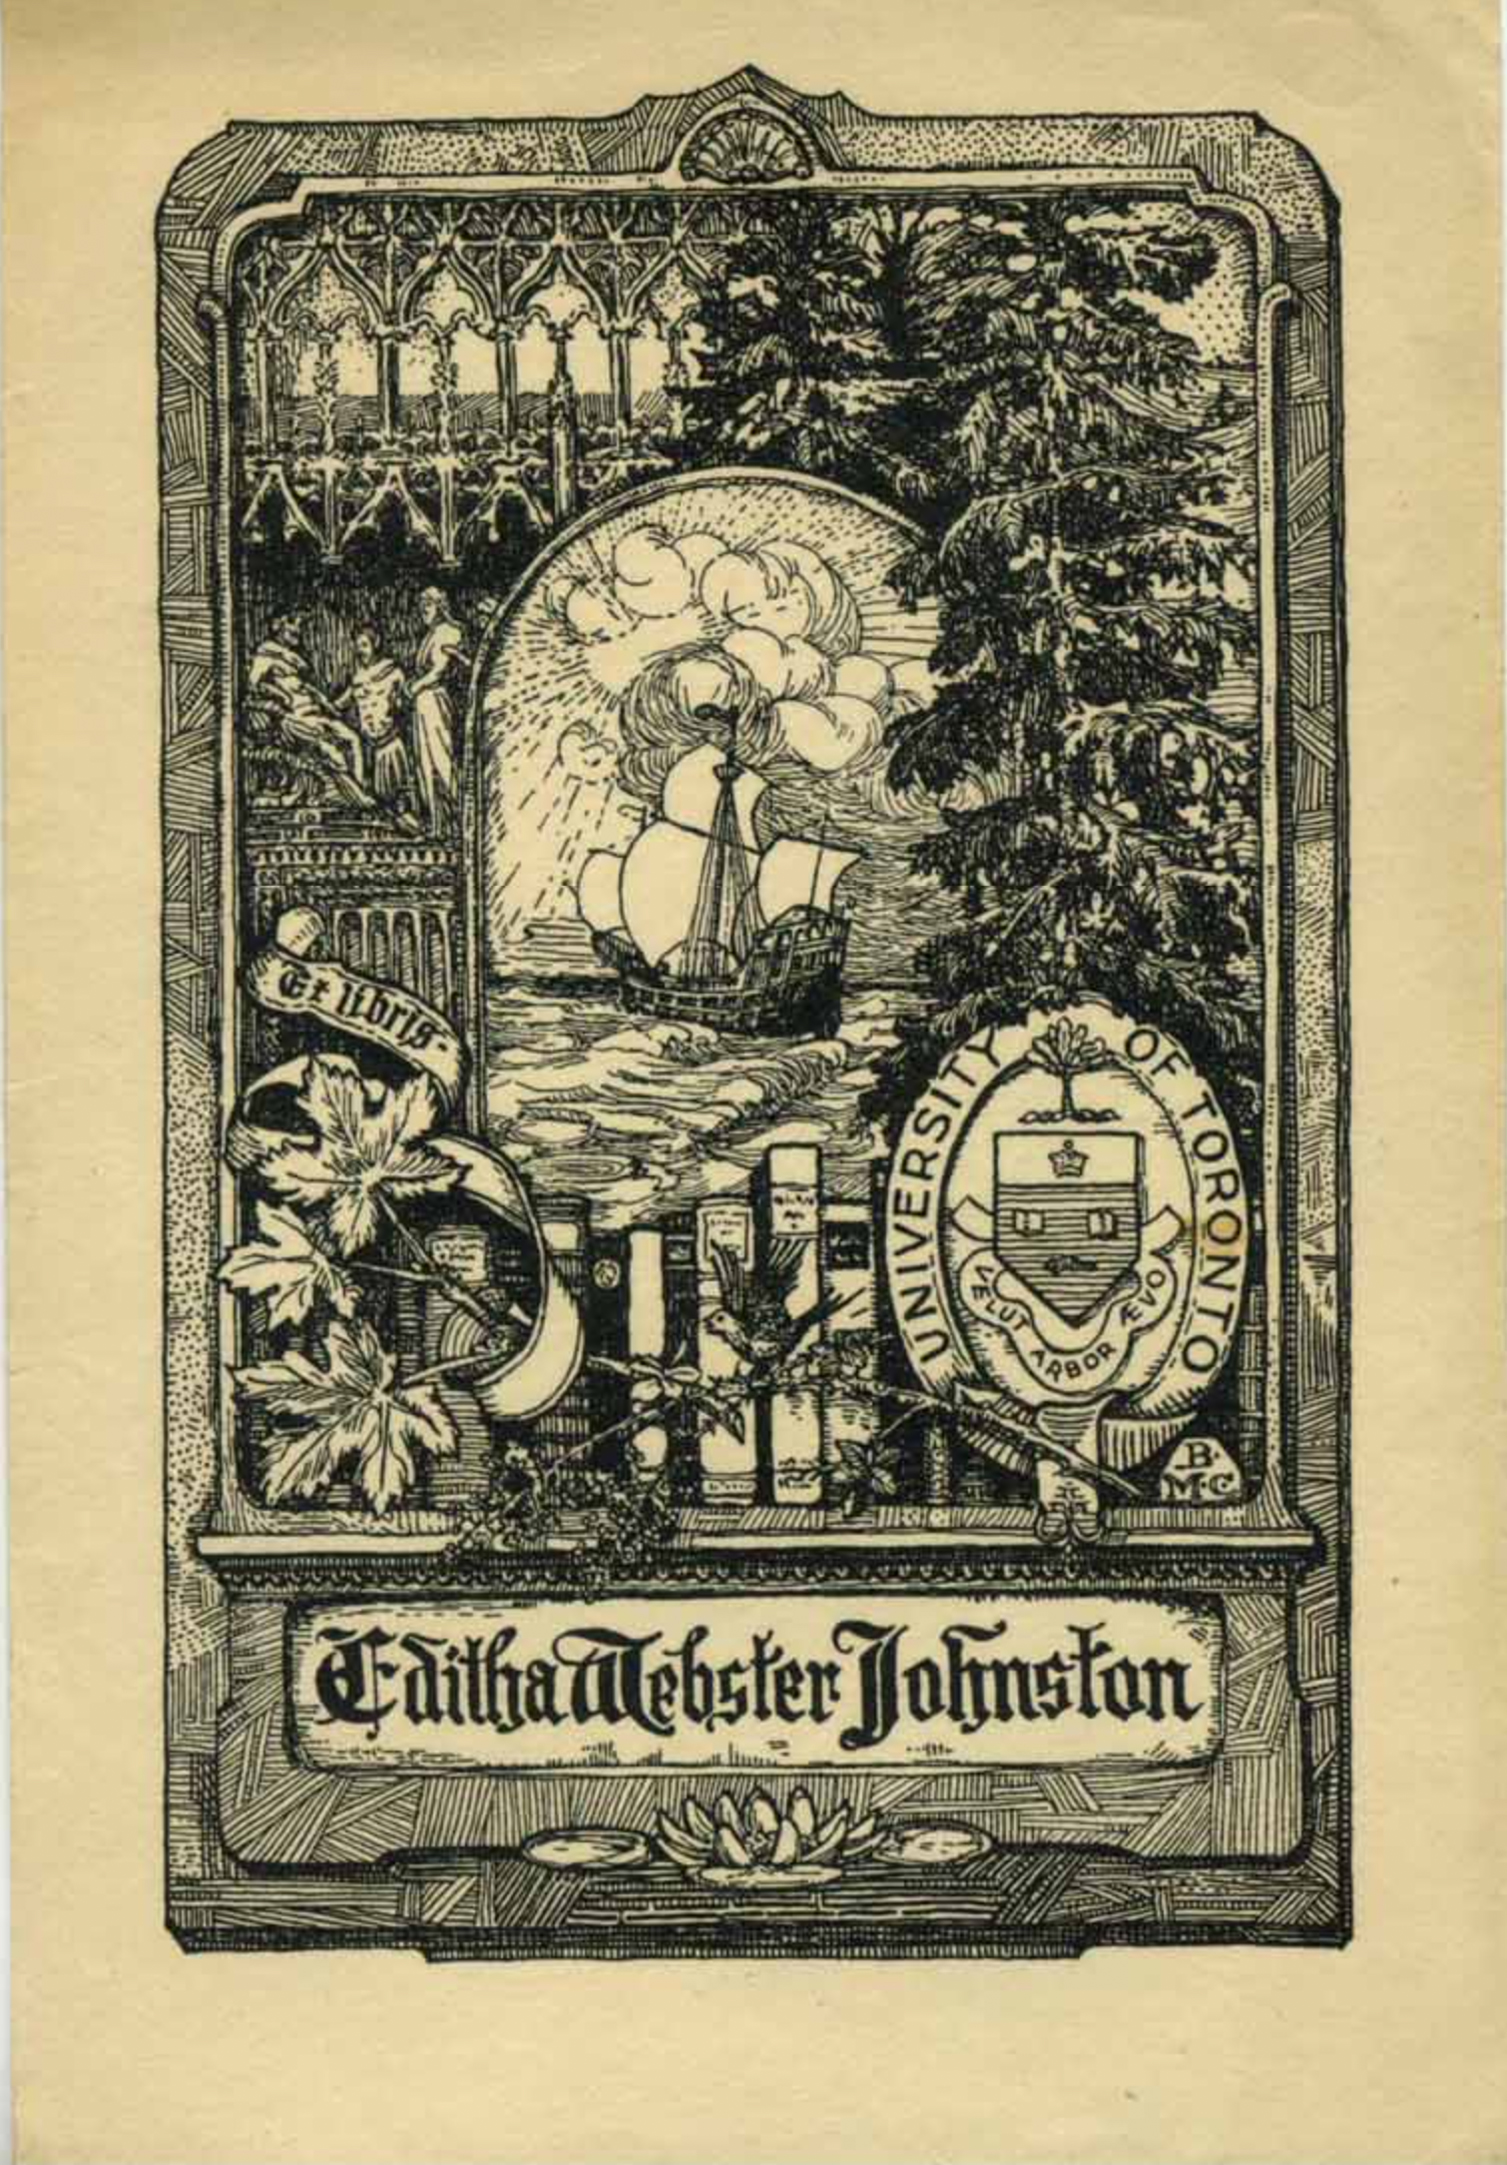 Bookplate of Editha Webster Johnston